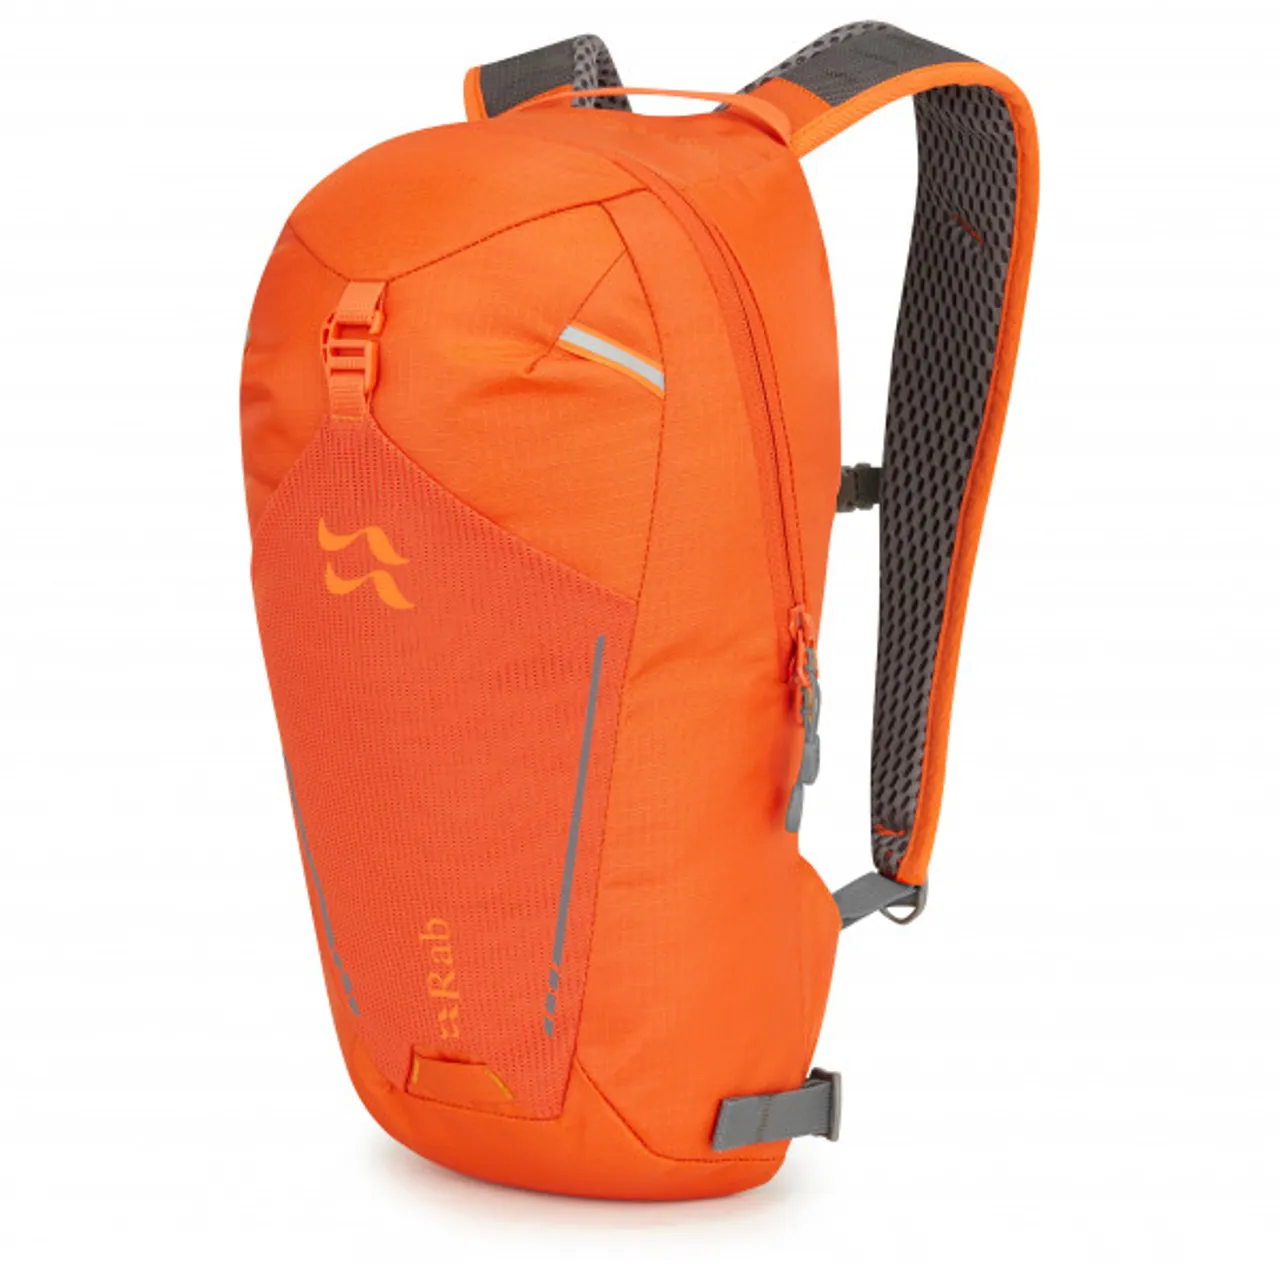 Rab - Tensor 10 - Daypack size 10 l, orange